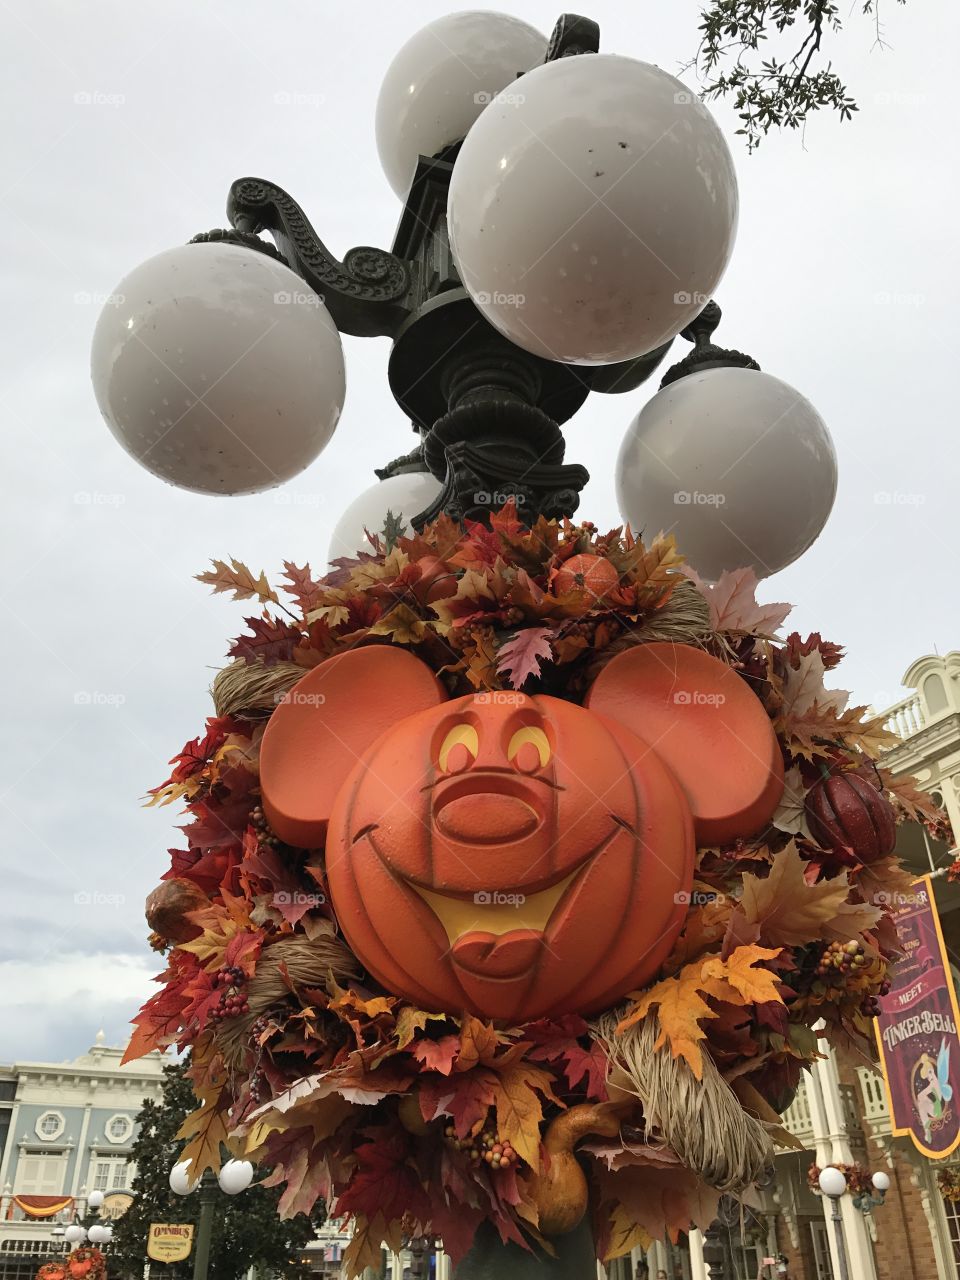 Disney Halloween decoration